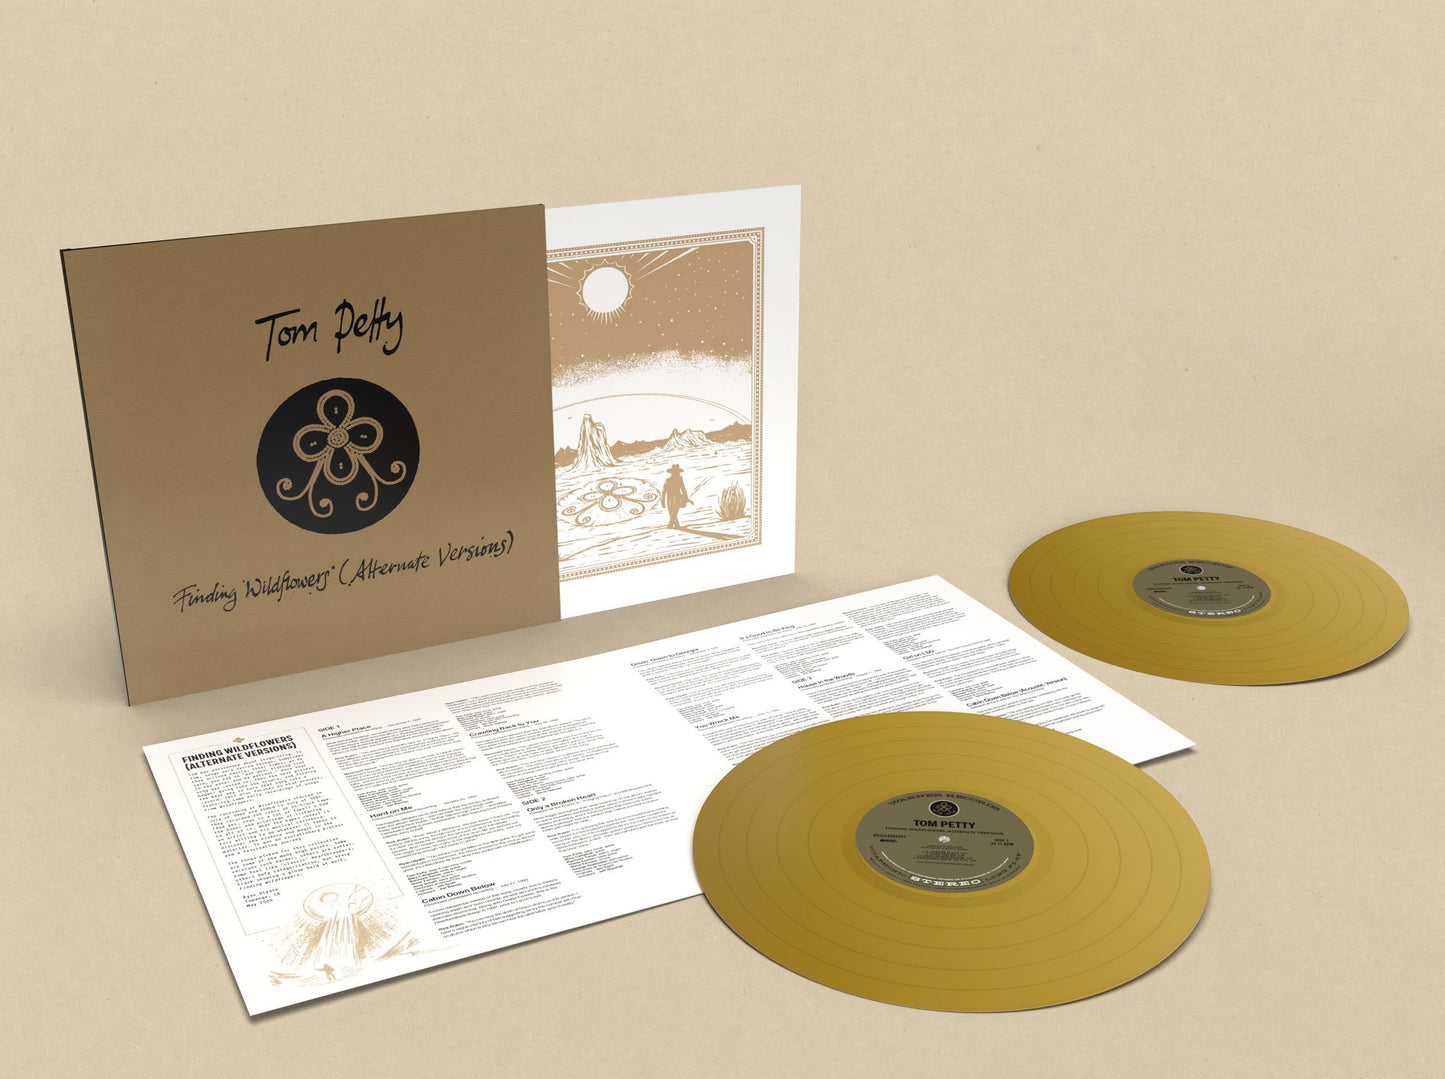 Tom Petty - Finding Wildflowers (Alternate Versions) 2LP (Ltd Gold Vinyl Edition)